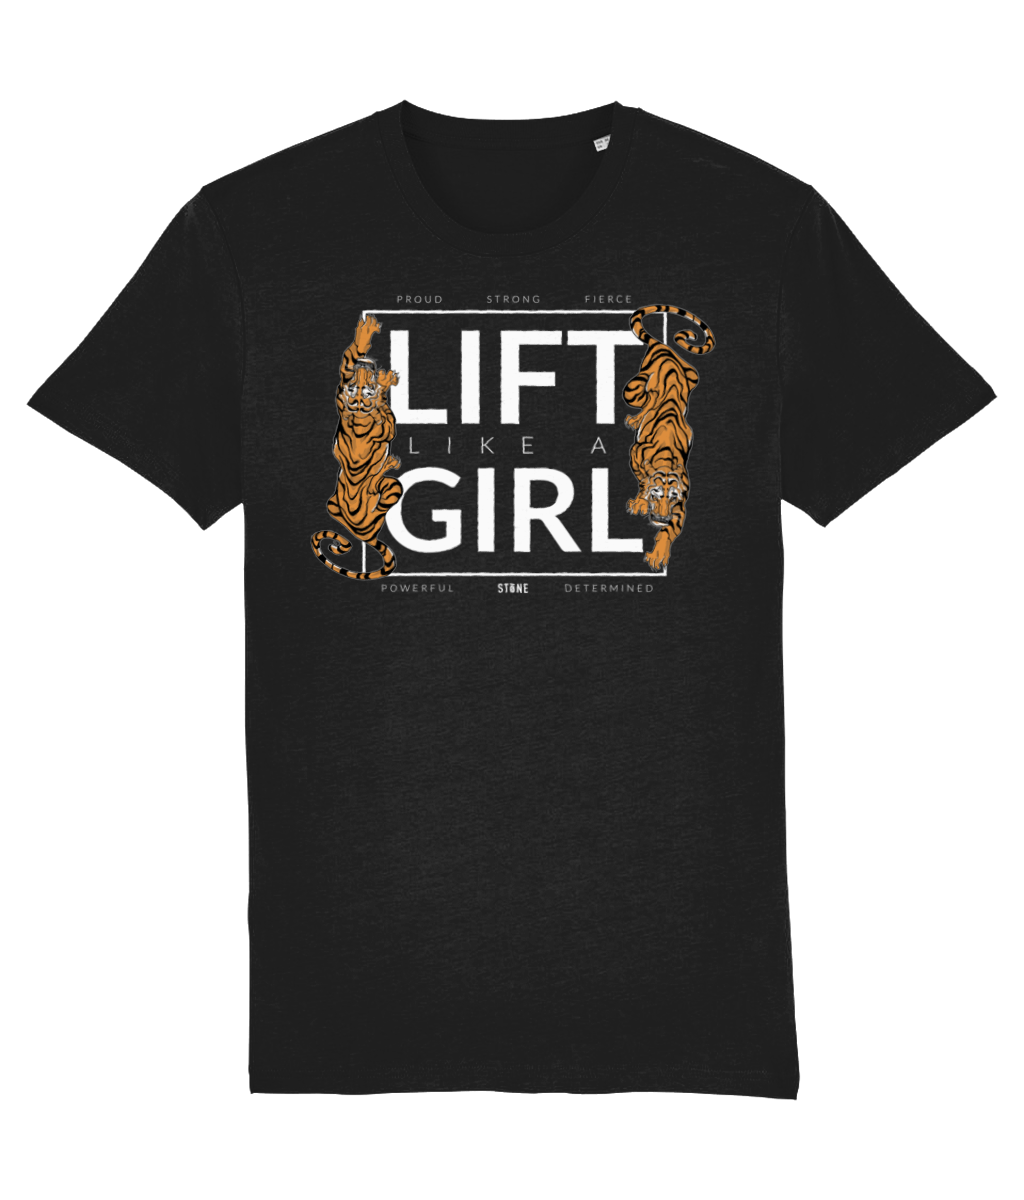 Lift like a Girl tee